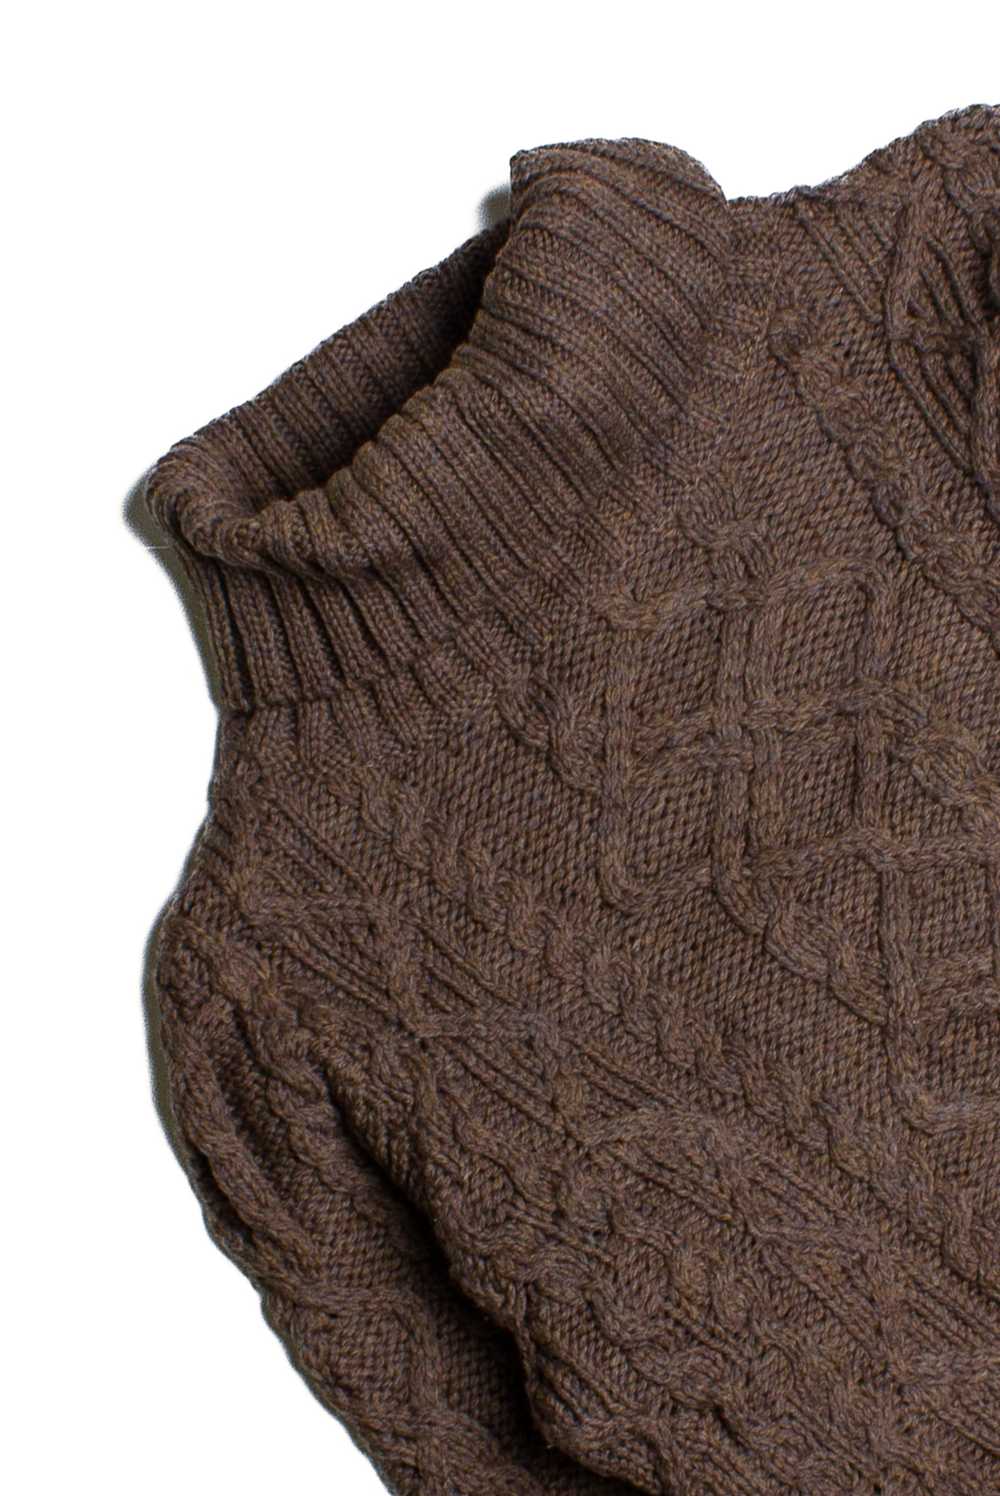 Paul James Vintage Fisherman Sweater (1990s) - image 2